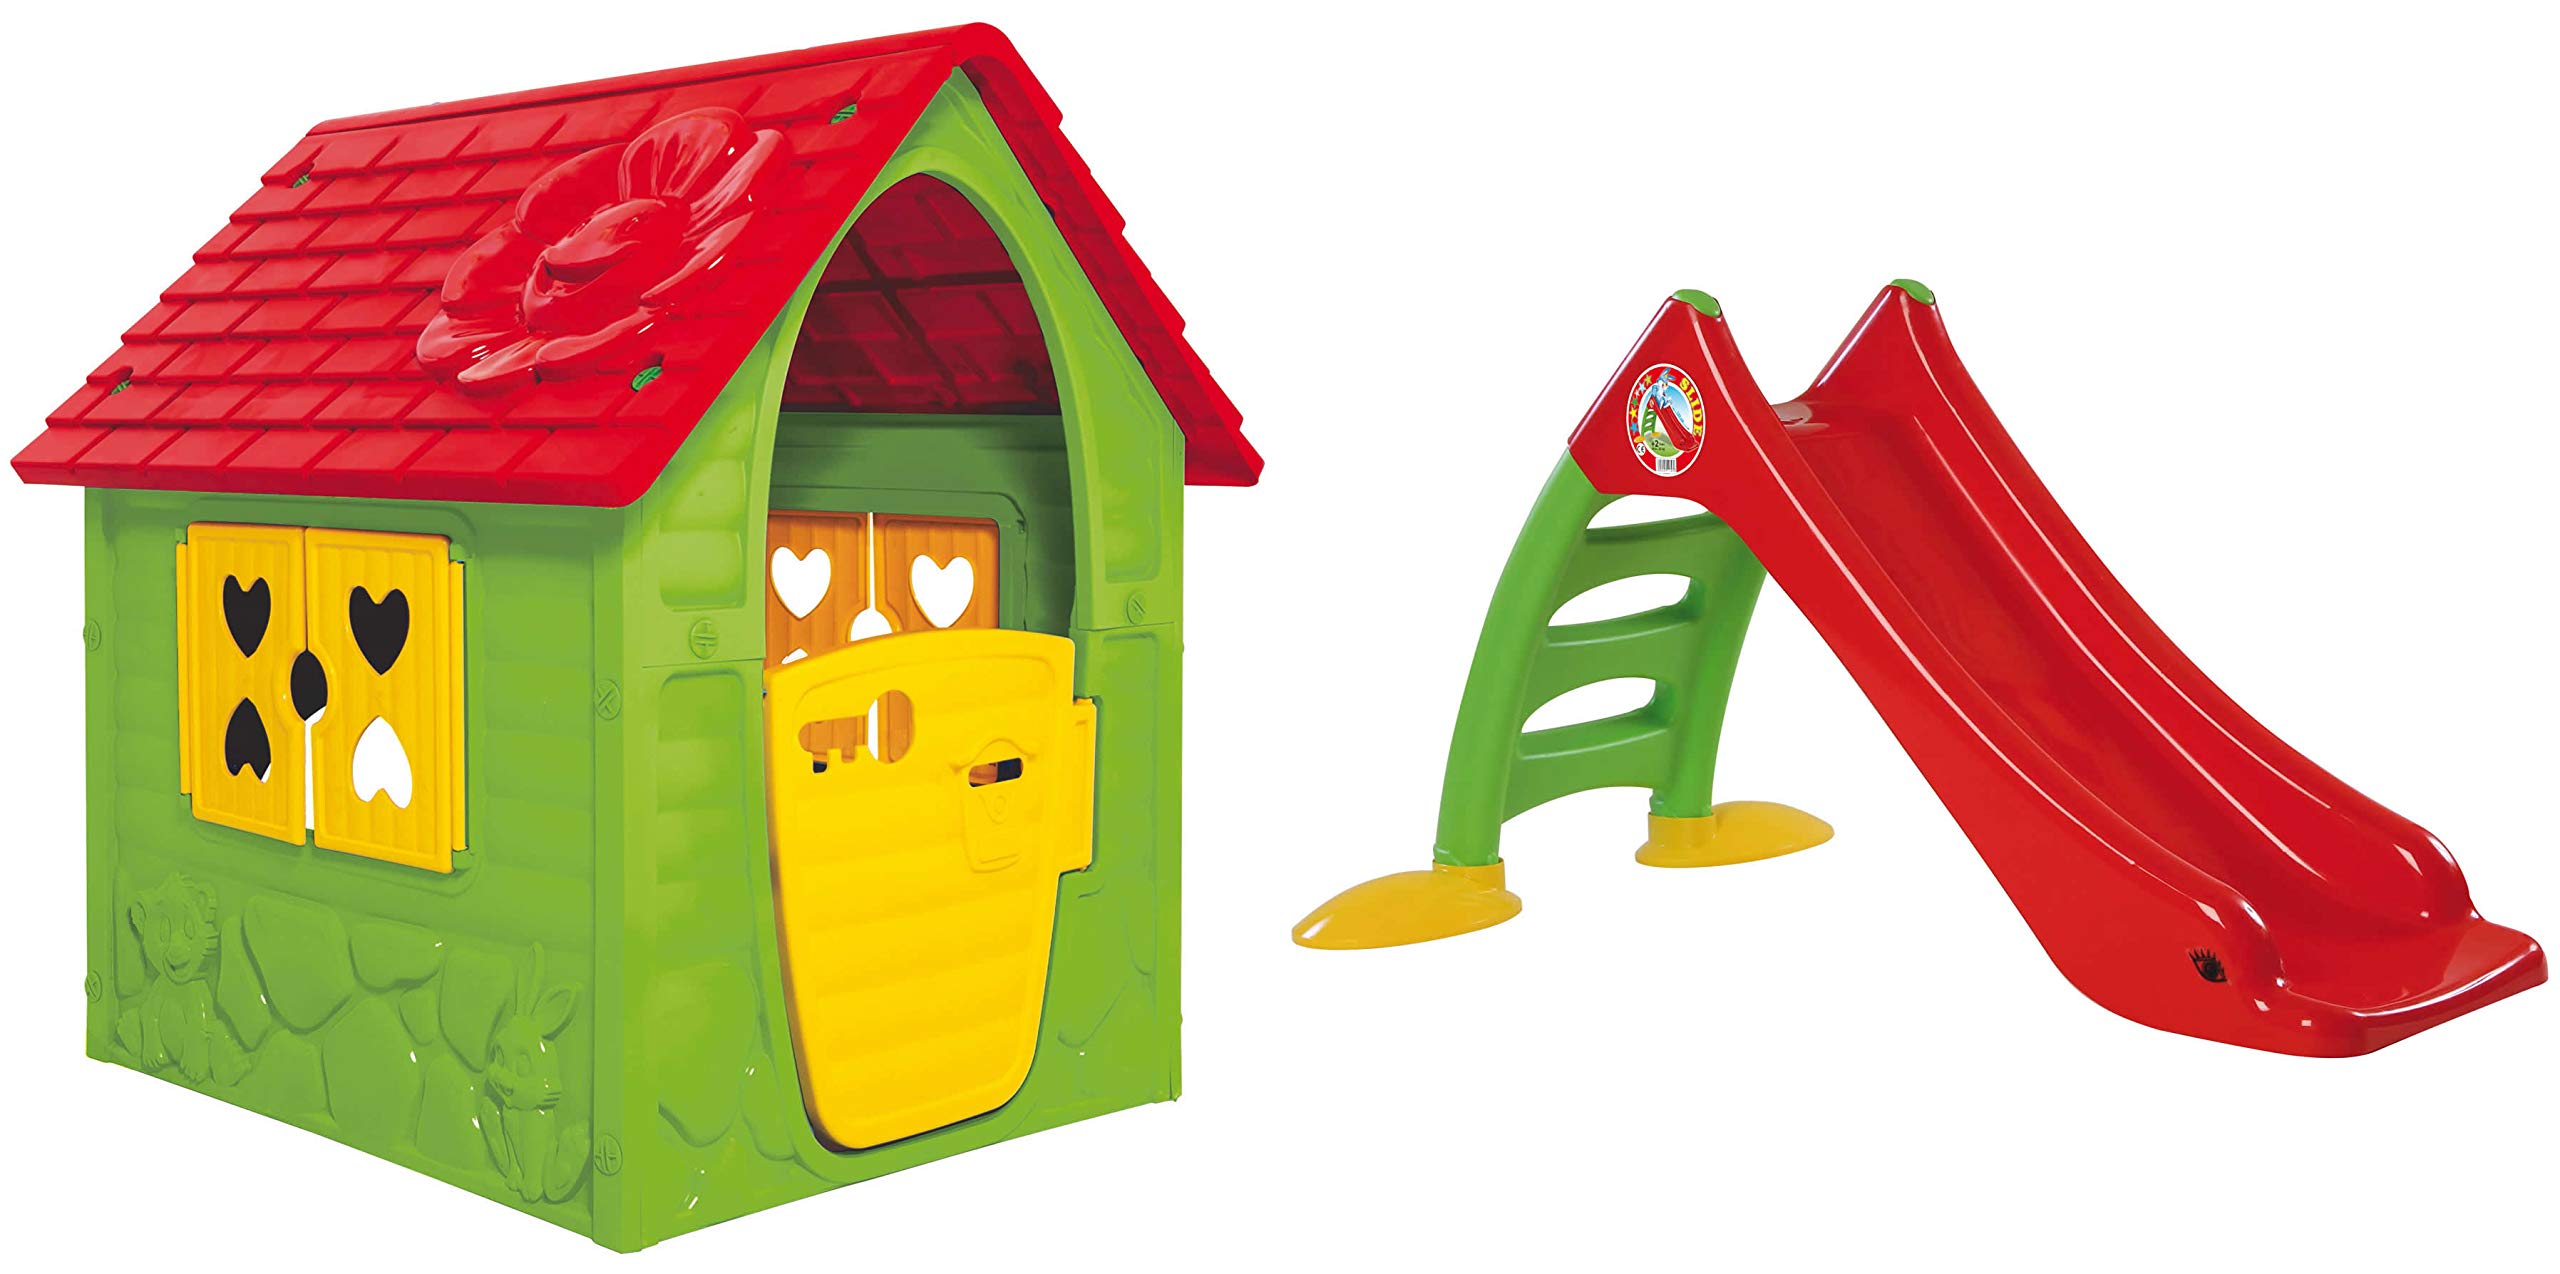 Dohany Spielhaus grün rot Kinderspielhaus Gartenhausmit Rutsche120 cm Indoor Outdoor +2J